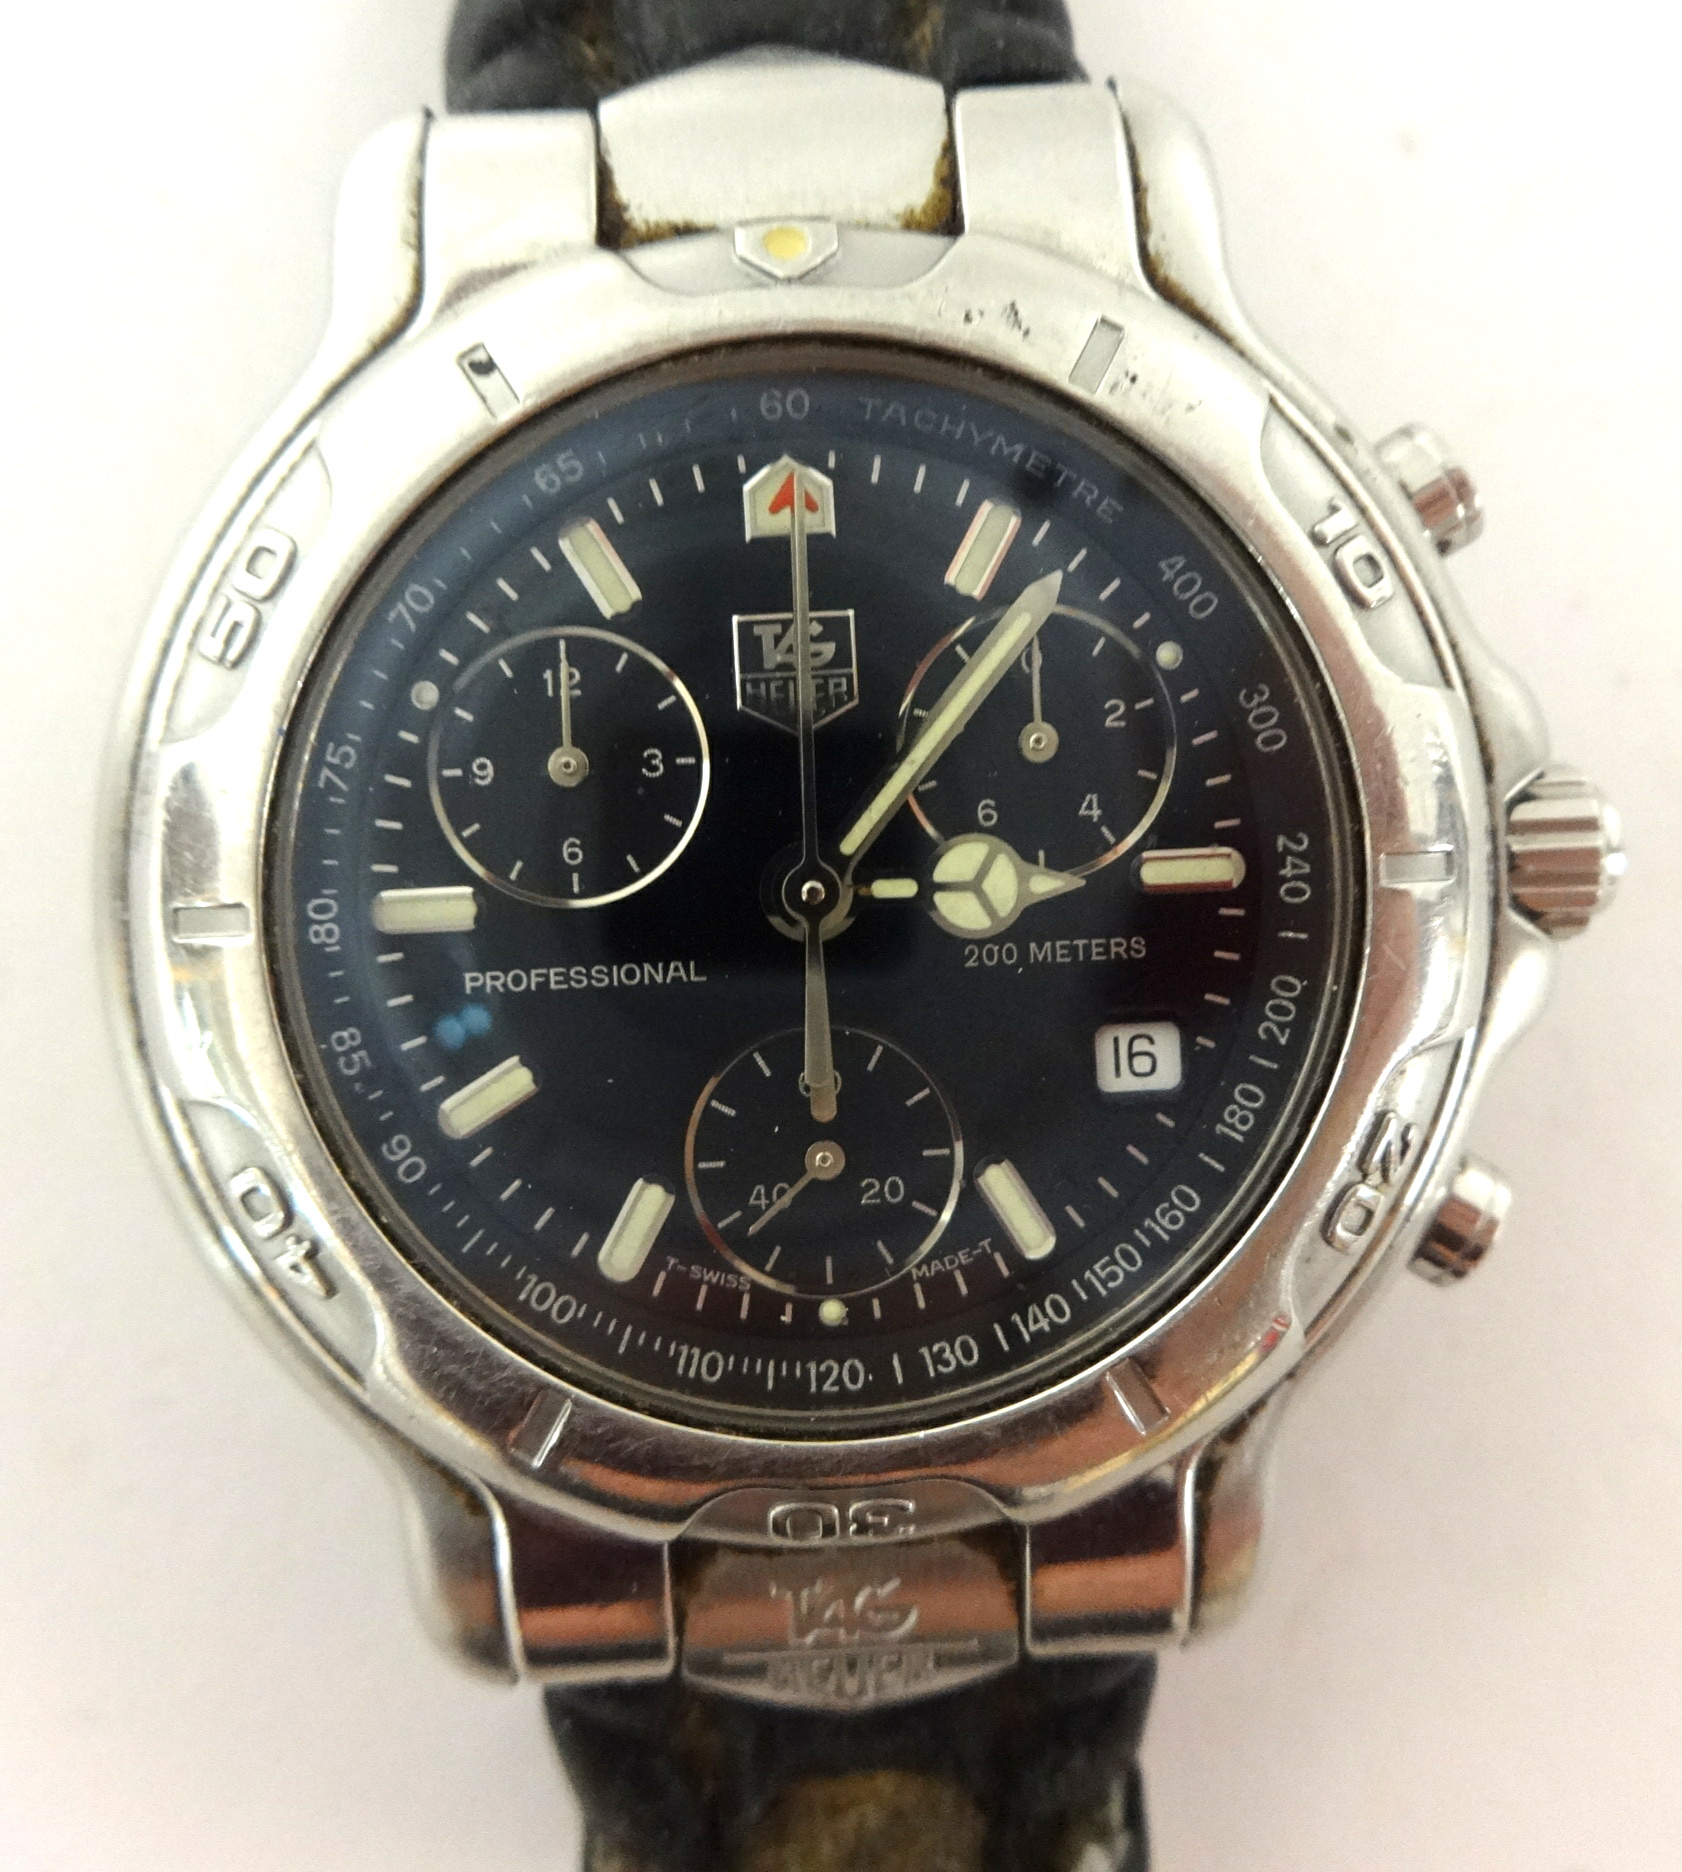 Gents Tag Heuer chronograph wrist watch, 200m, strap worn